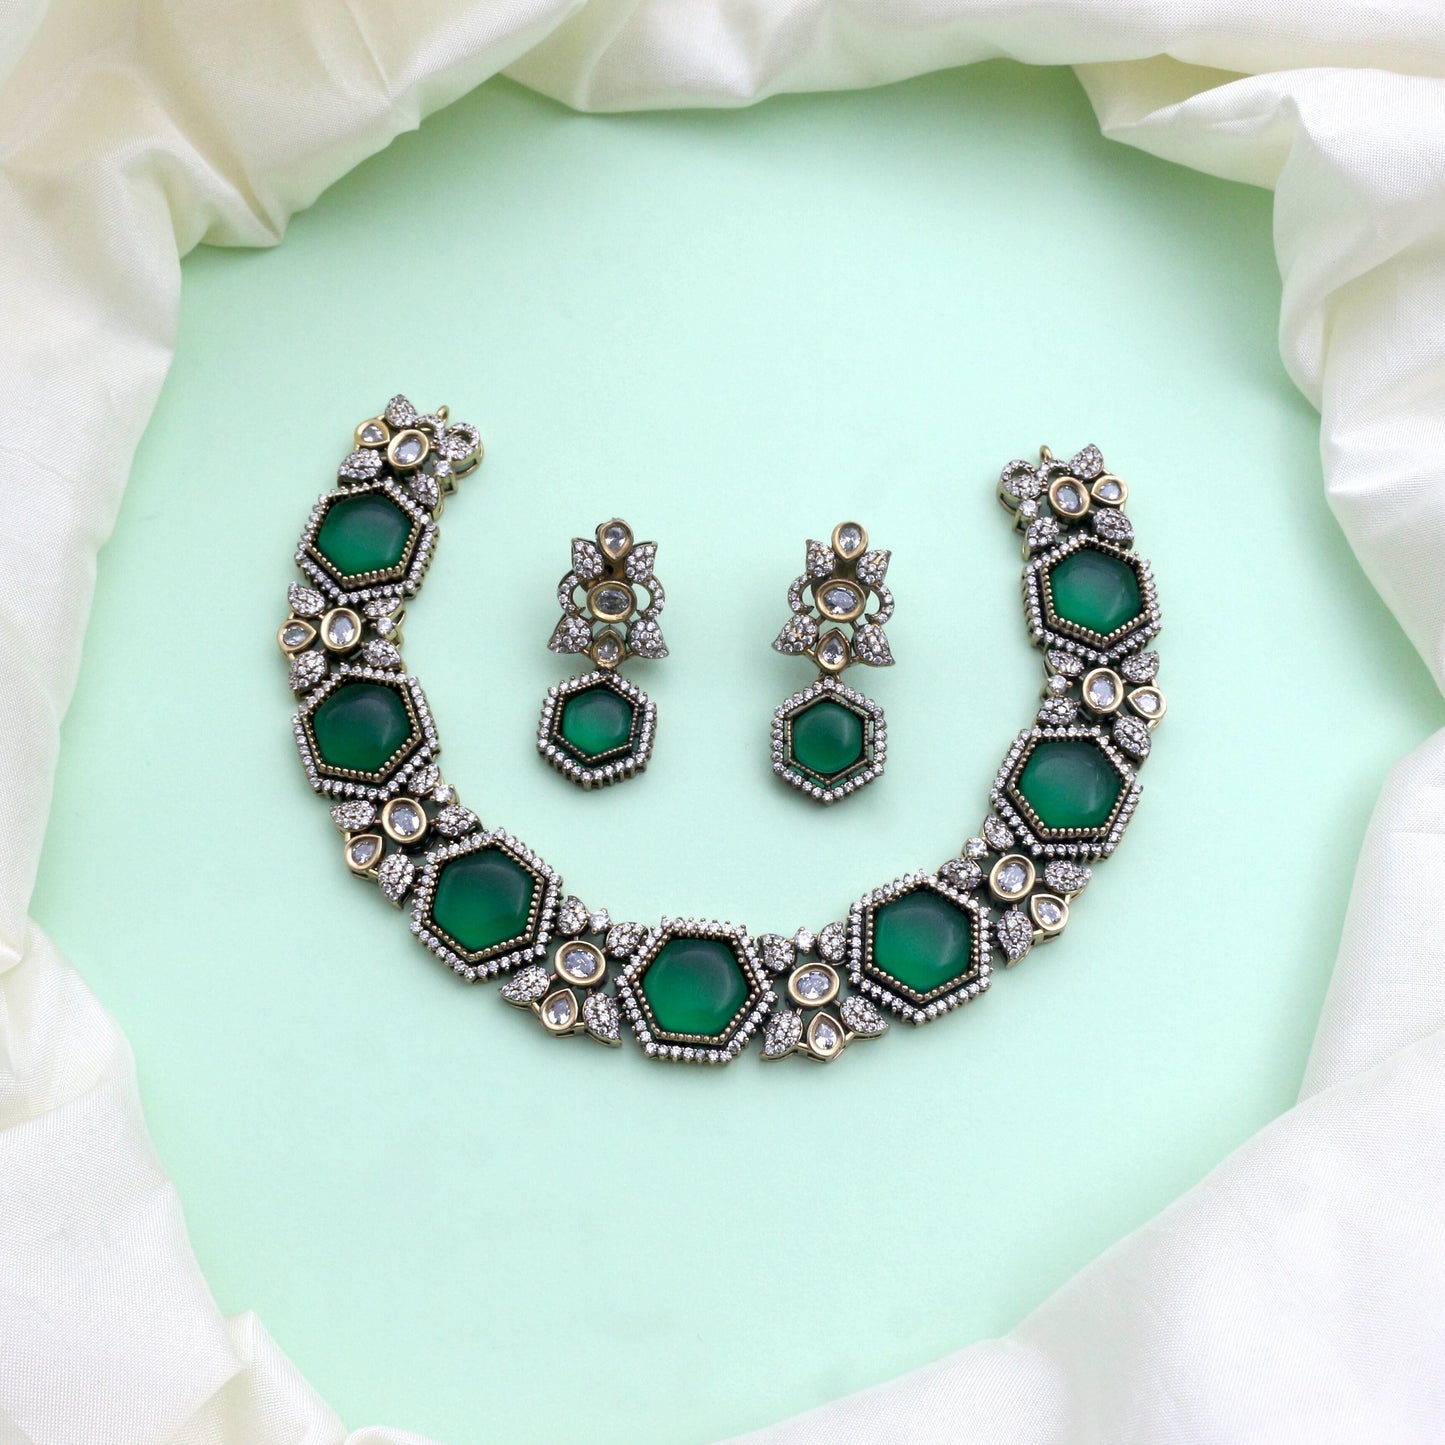 Grand Victorian Hexagon Bridal Necklace Set - Emerald